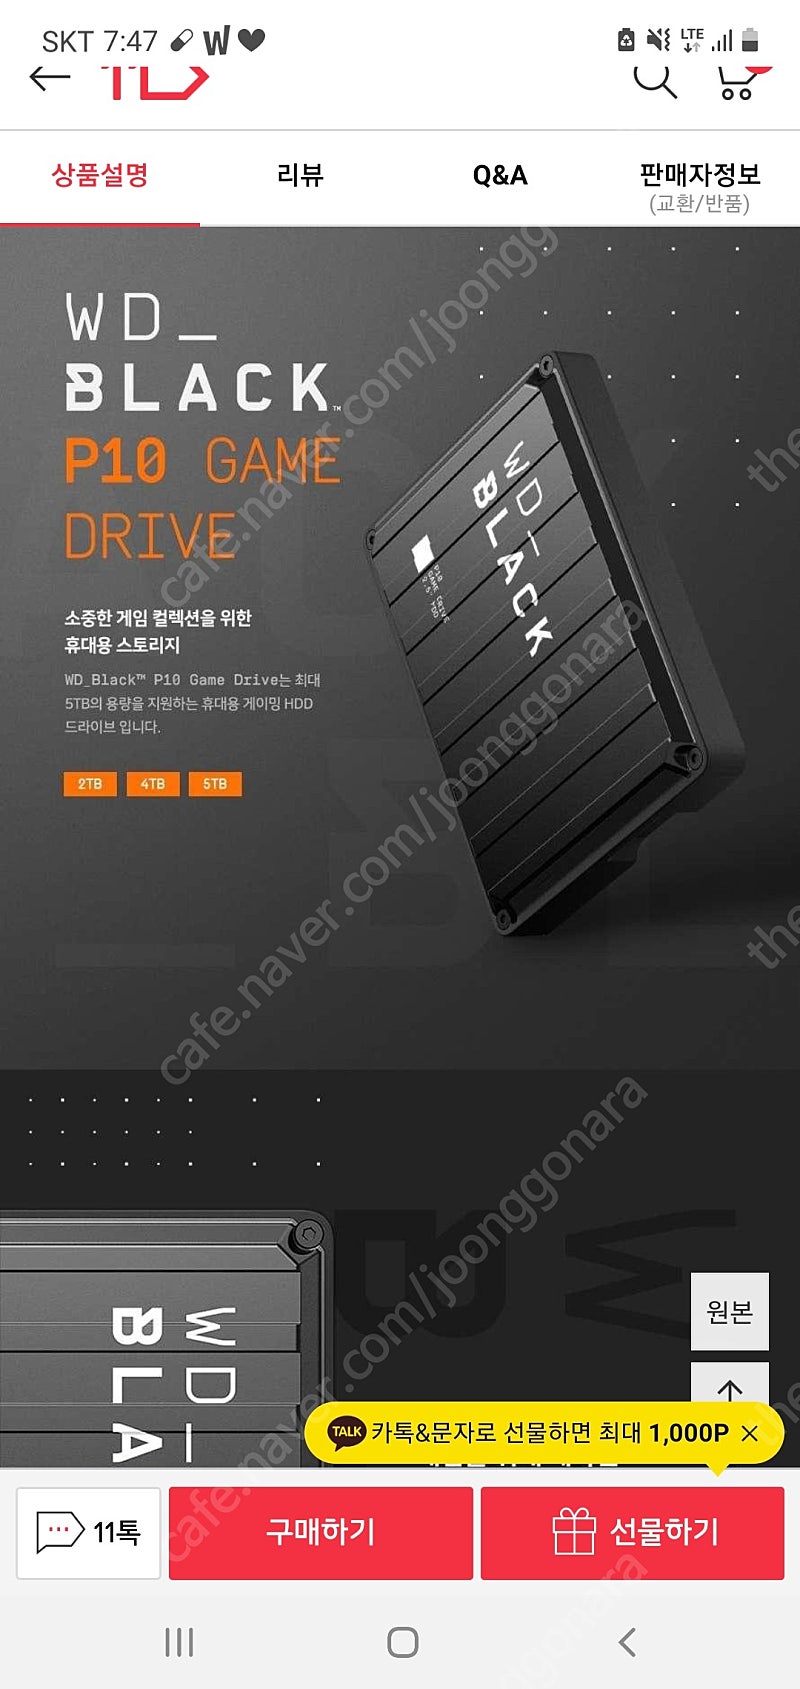 WD Black Game Drive P10 2TB 외장하드 판매